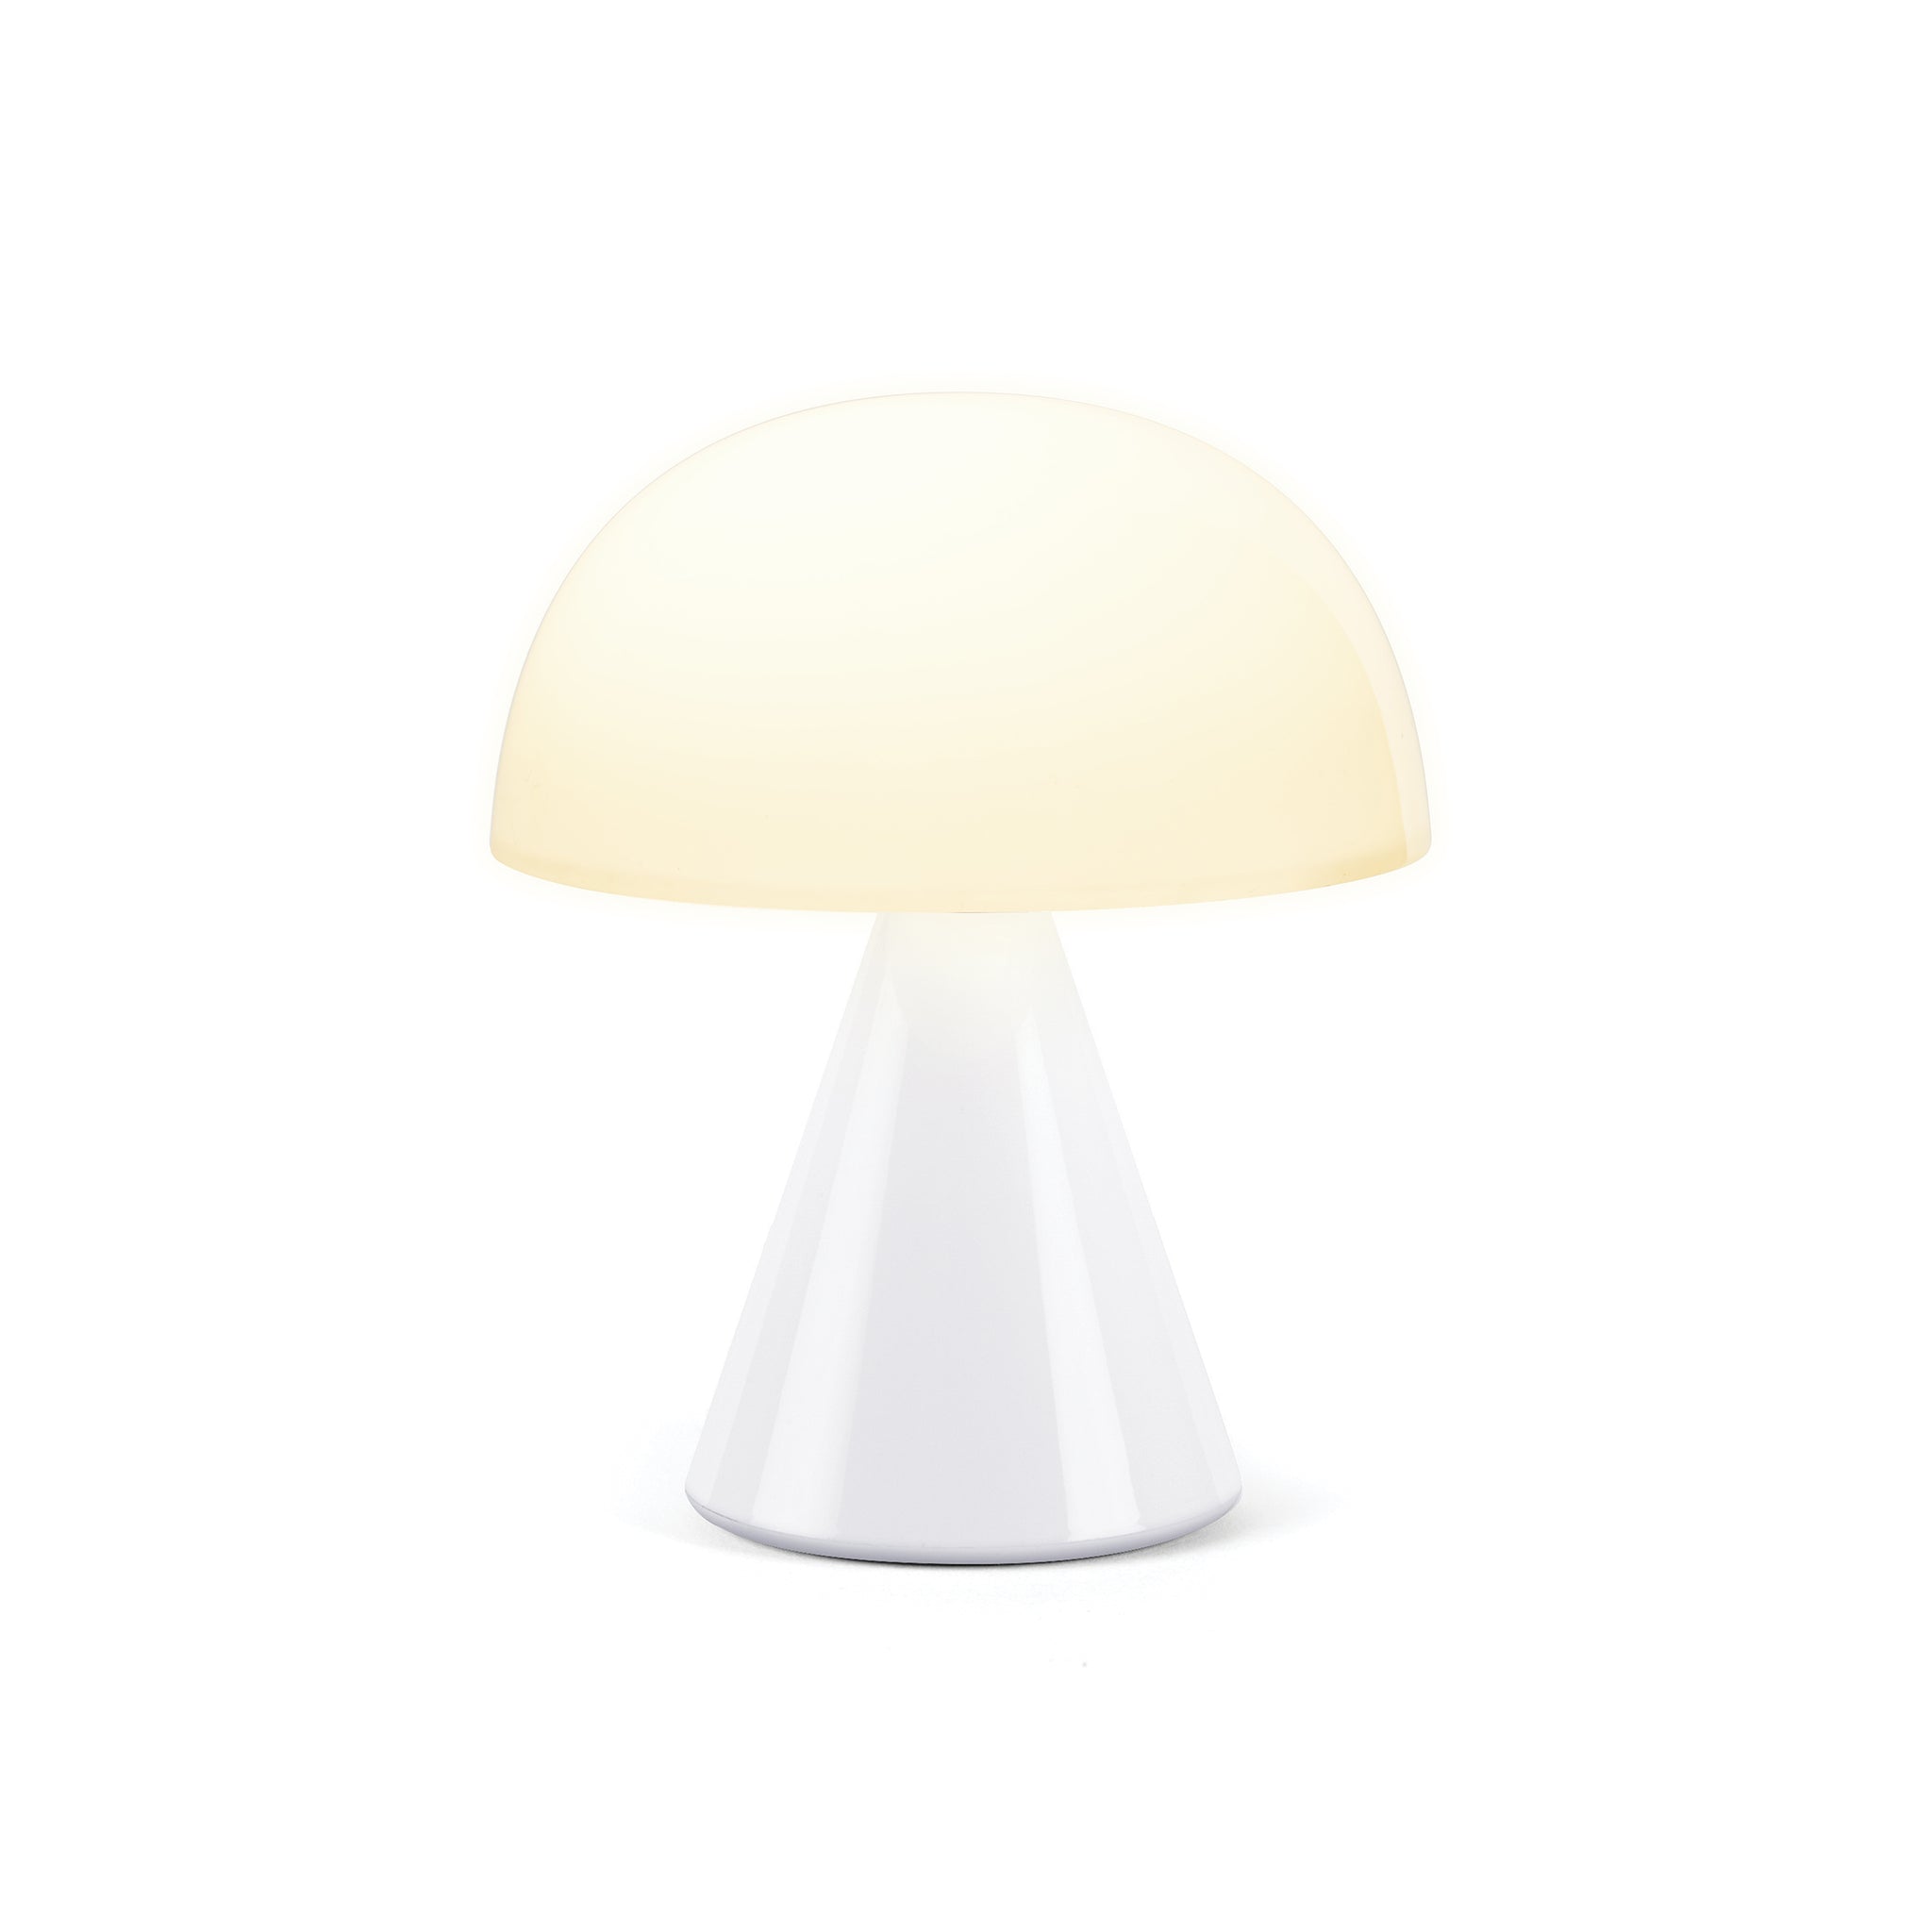 Lexon Mina Medium Glossy White│Oplaadbare LED-Lamp│art. LH64WG│vooraanzicht met warm licht aan